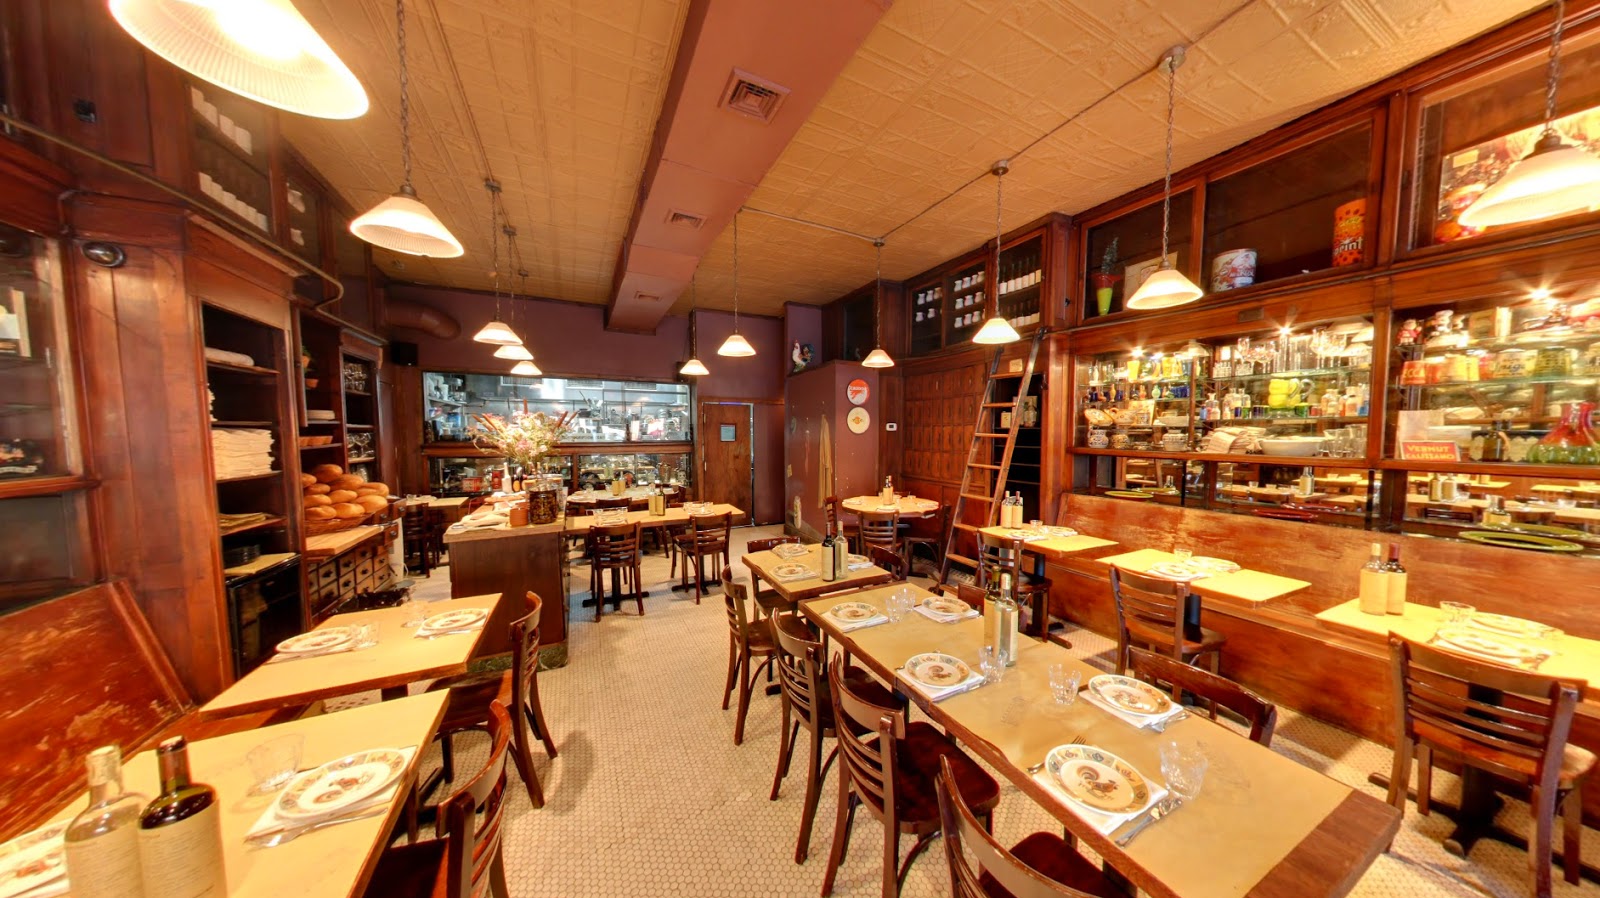 Photo of Locanda Vini & Olii in Brooklyn City, New York, United States - 4 Picture of Restaurant, Food, Point of interest, Establishment, Bar